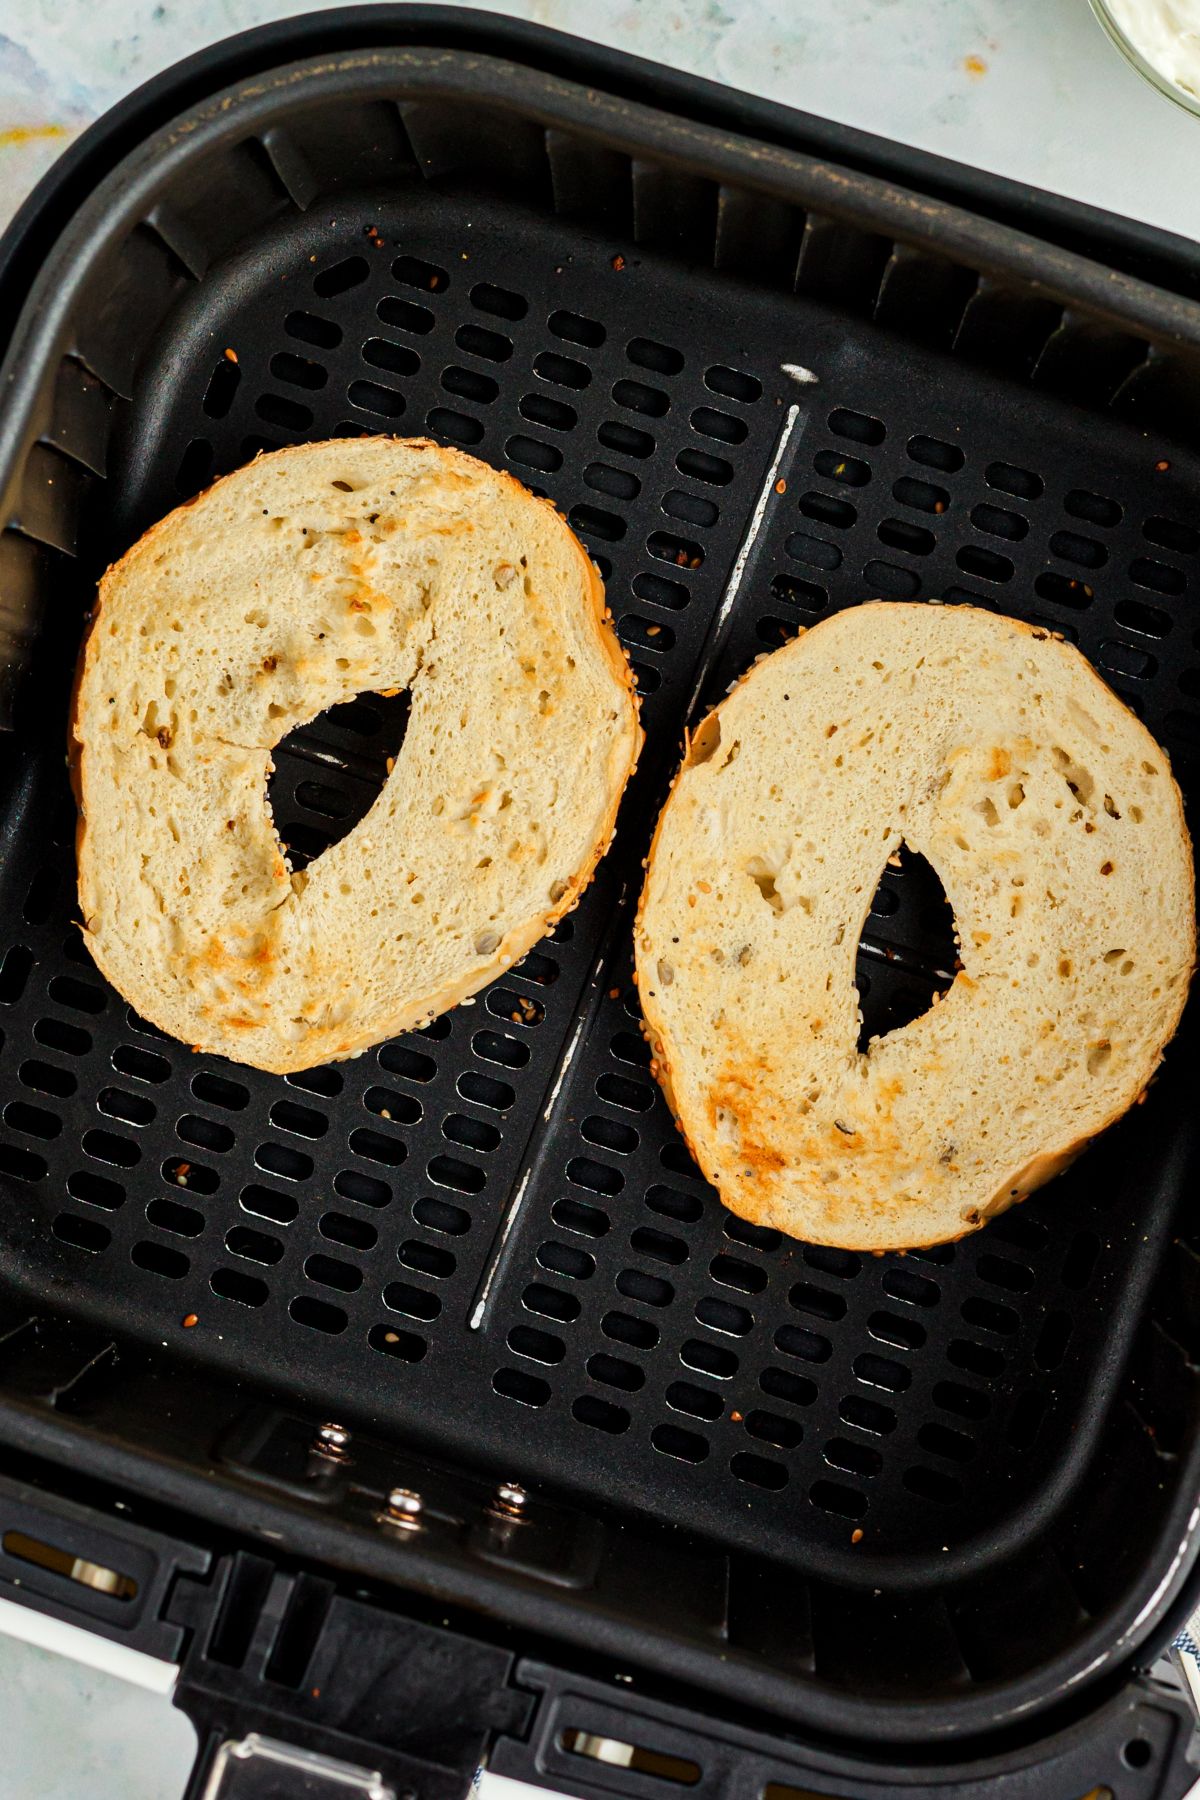 Lightly golden toasted bagels in the air fryer basket